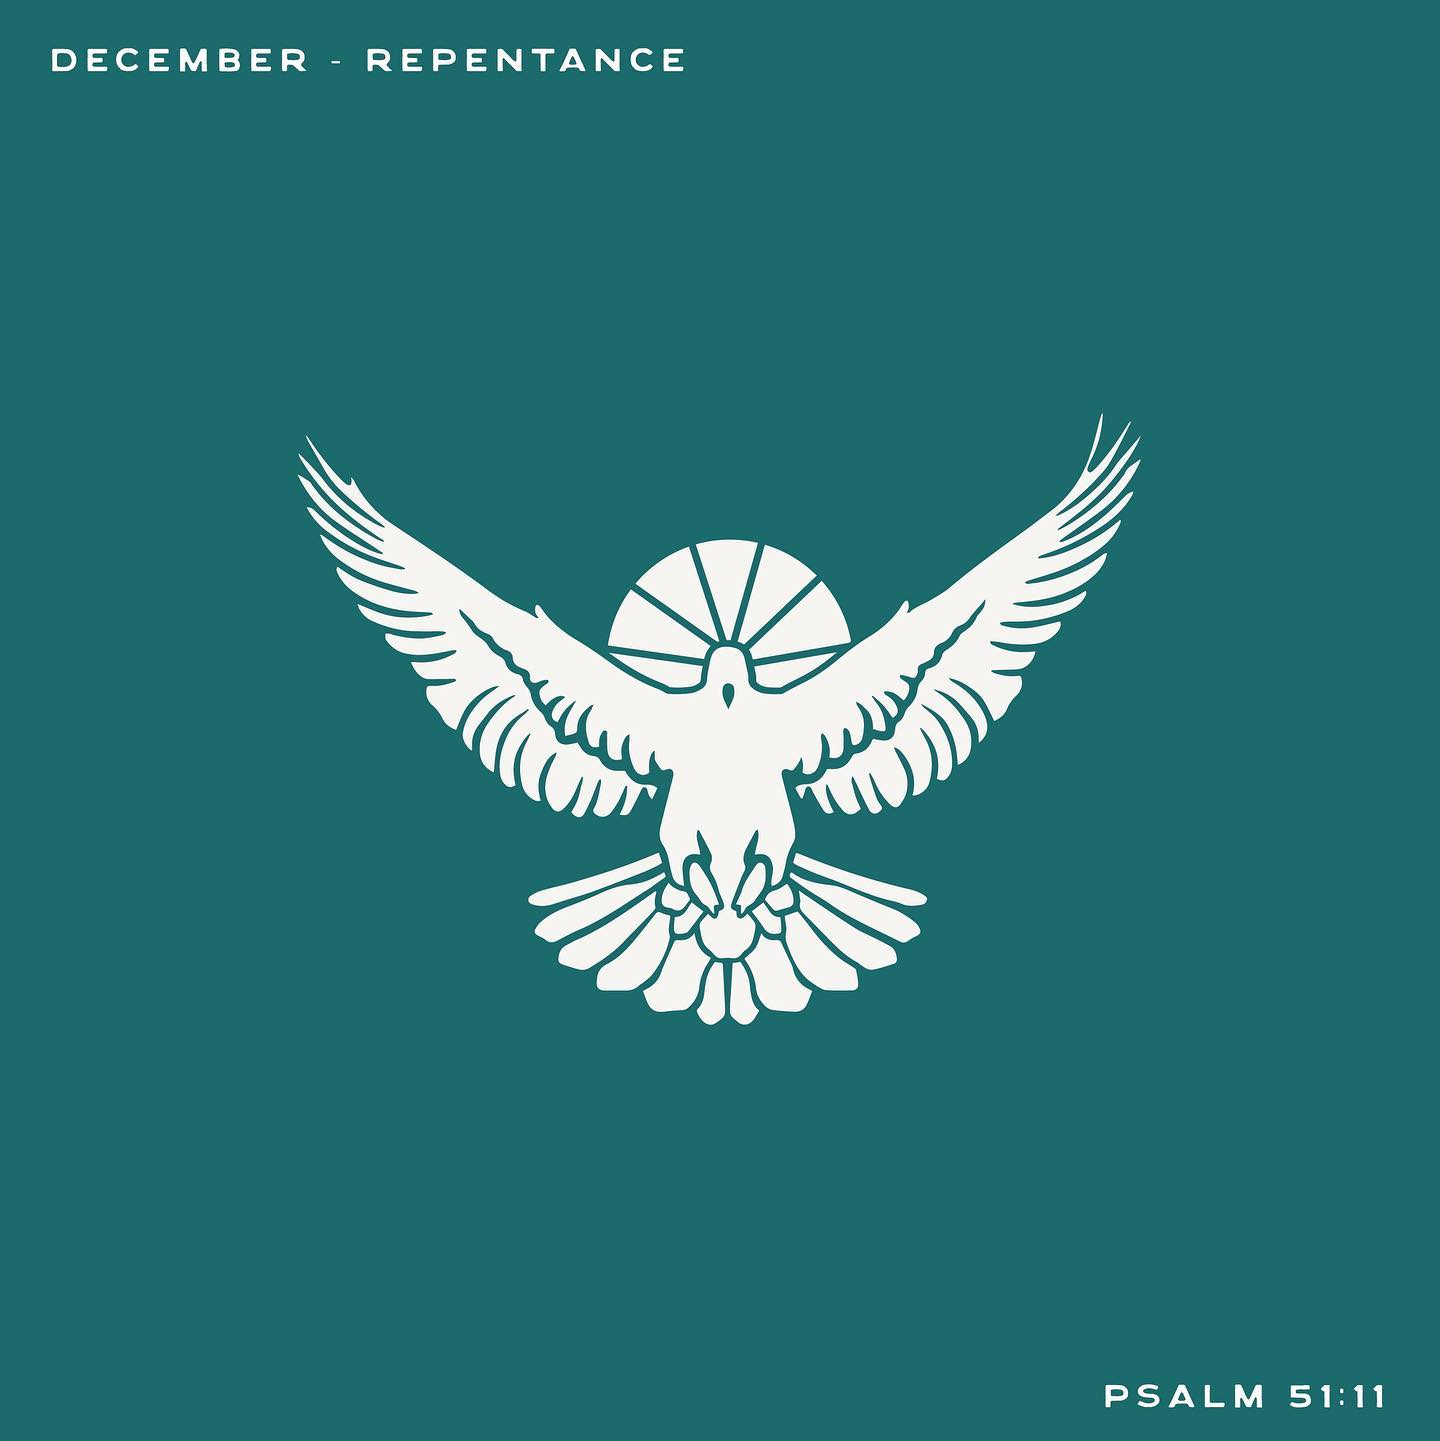 Psalm 51:11 (Repentance - Week 11)